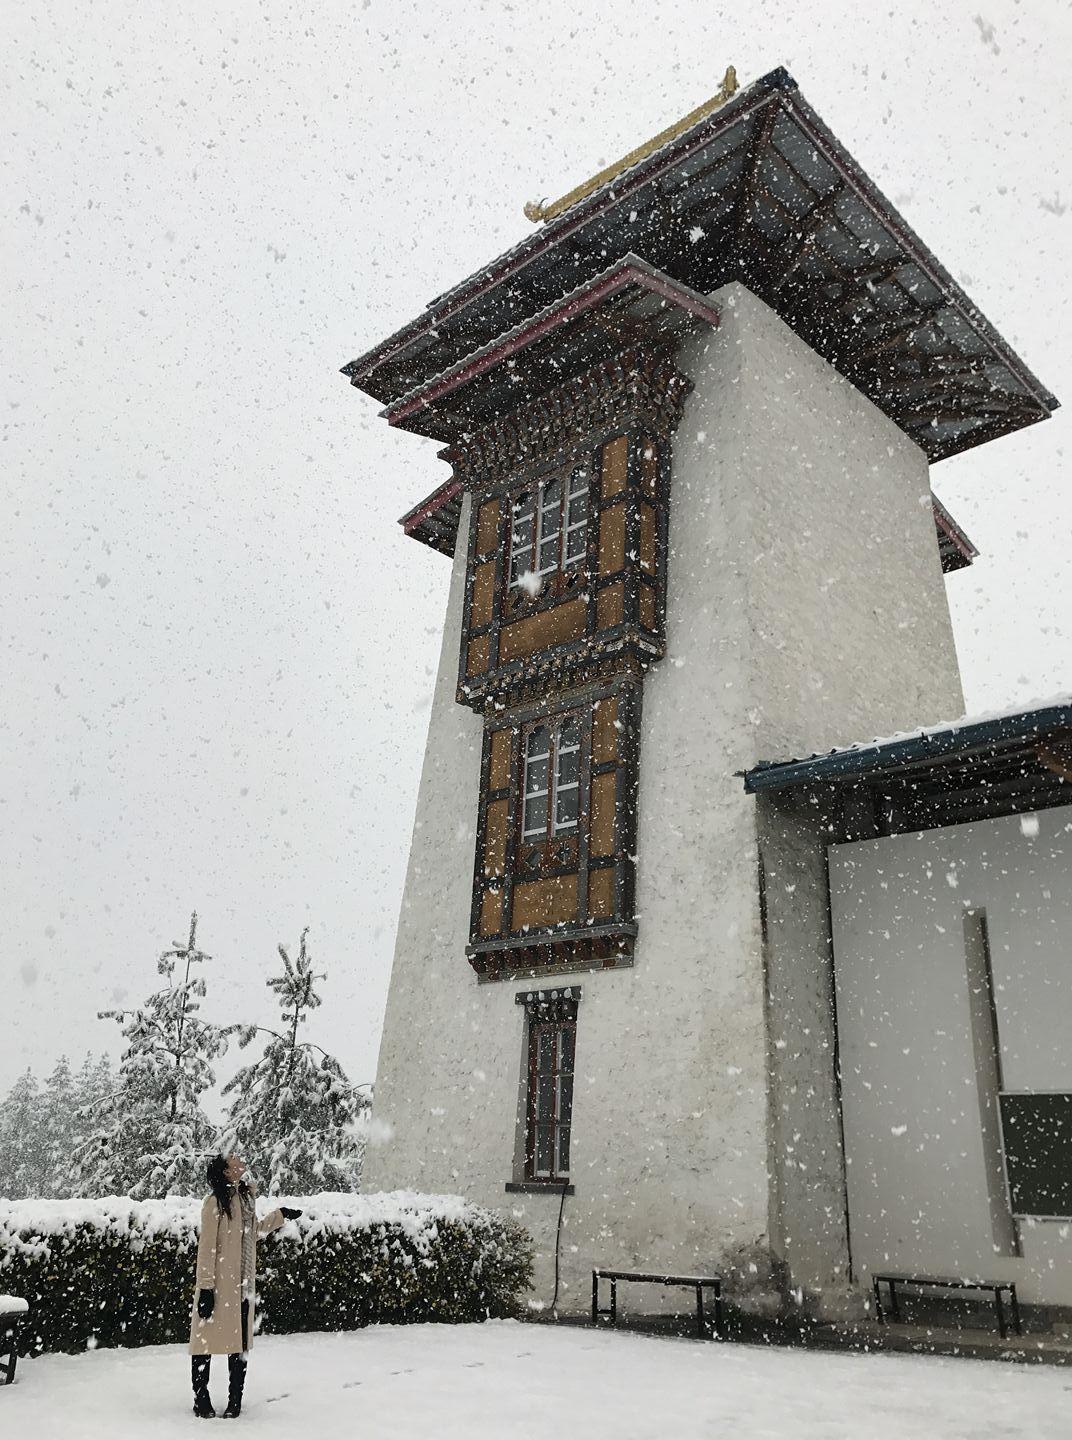 A Bhutanese student enjoying the first snowfall of 2017